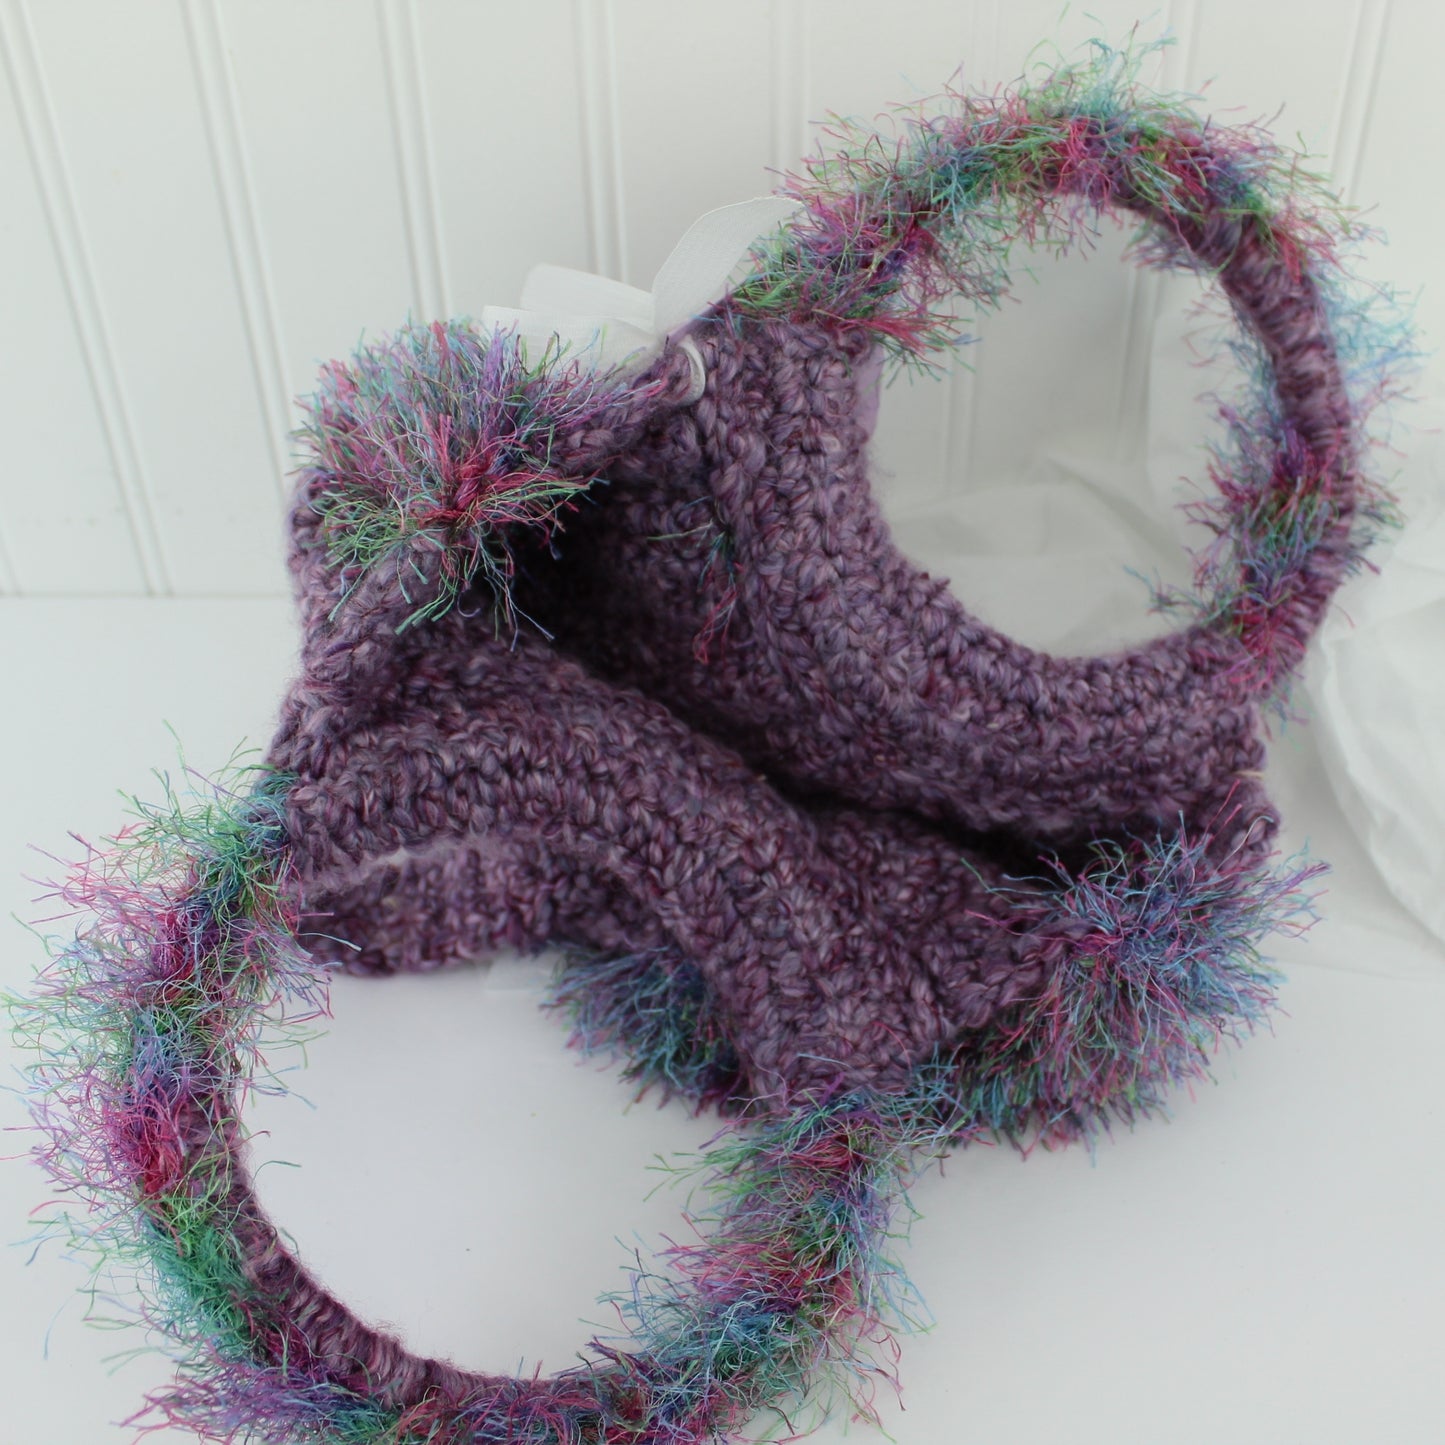 Rosebud Creation Hand Made Crocheted Wool Purse Eyelash Fringe "Lavender Fluff" round handles with eyelash yarn